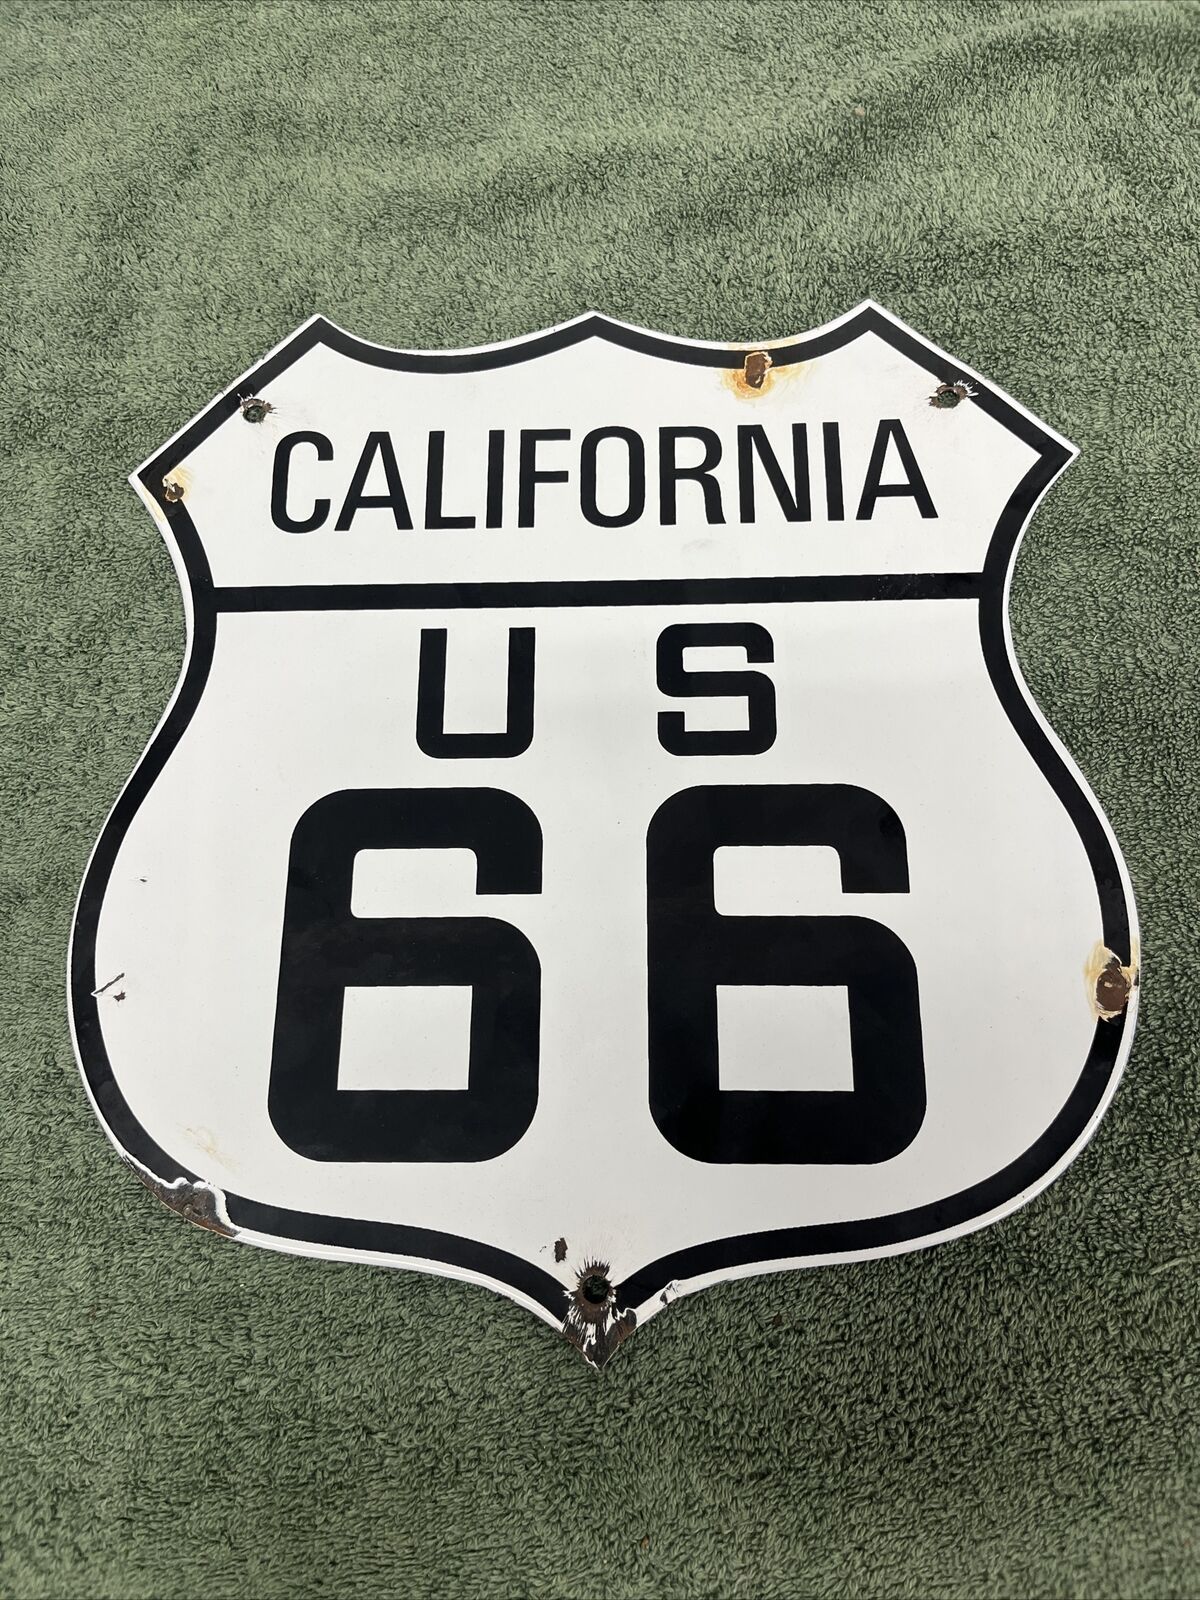 Vintage US Route 66 California Porcelain Highway State Road Original Sign